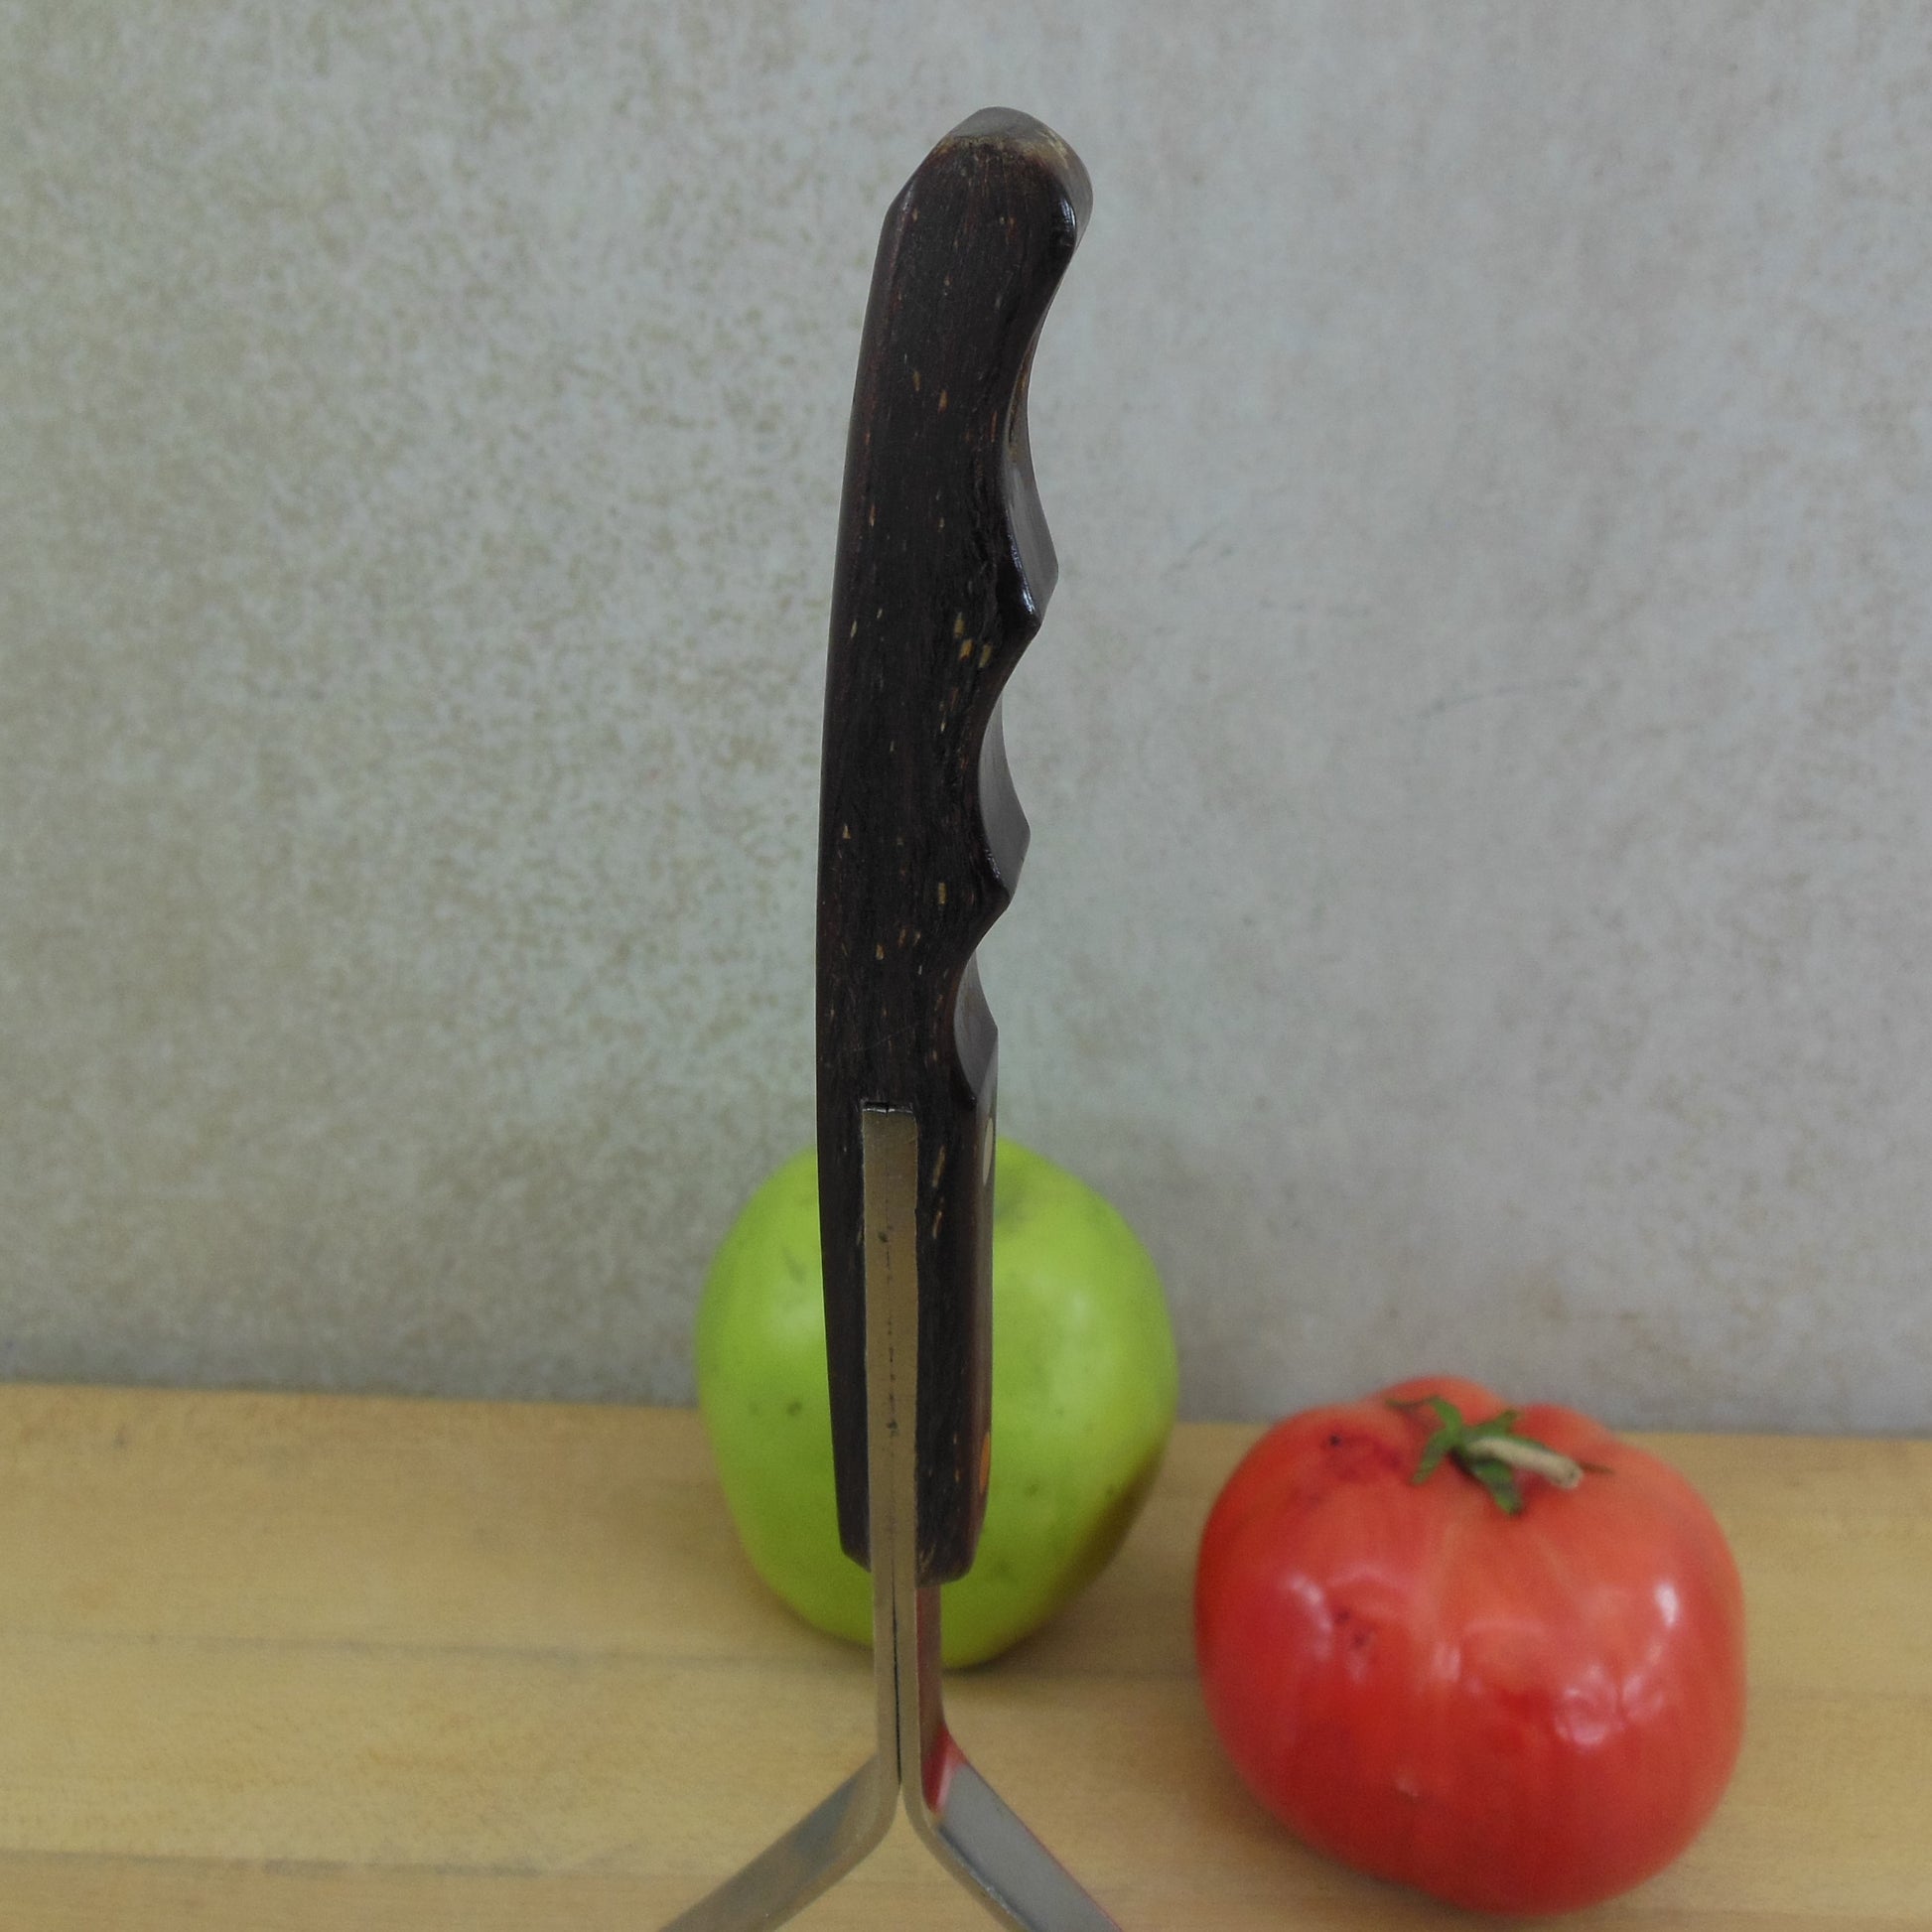 Wayne Japan Stainless Potato Vegetable Masher - Wood Grip Handle used